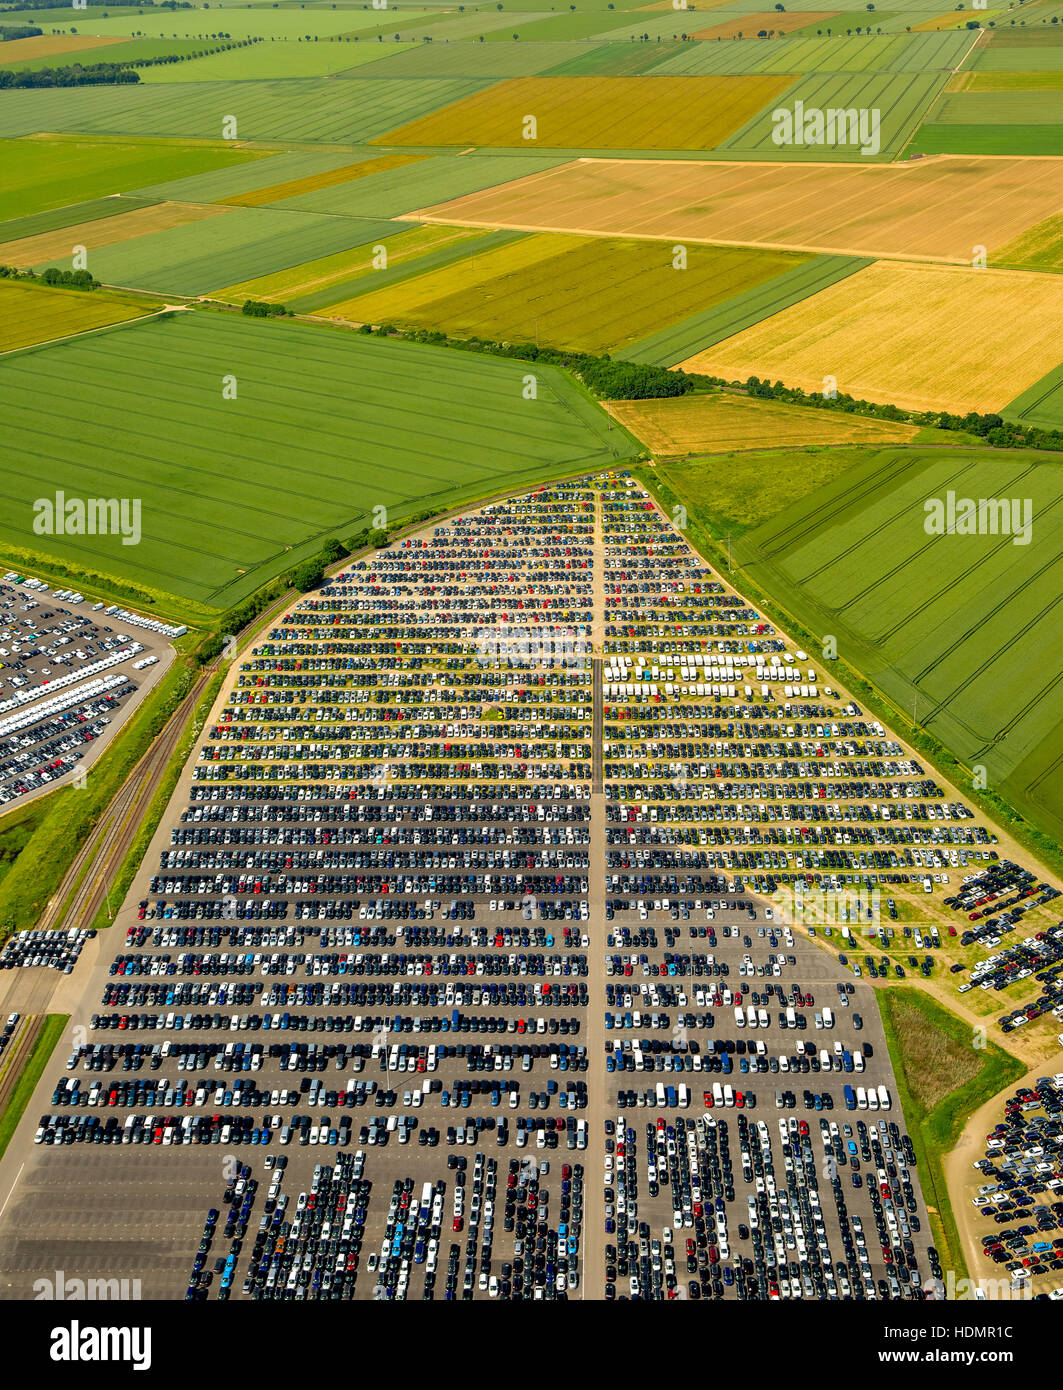 Aerial photograph, new car parking lot surrounded by fields, Citroen, Peugeot, Ford, Wallenius Wilhelmsen Logistics, Zülpich Stock Photo